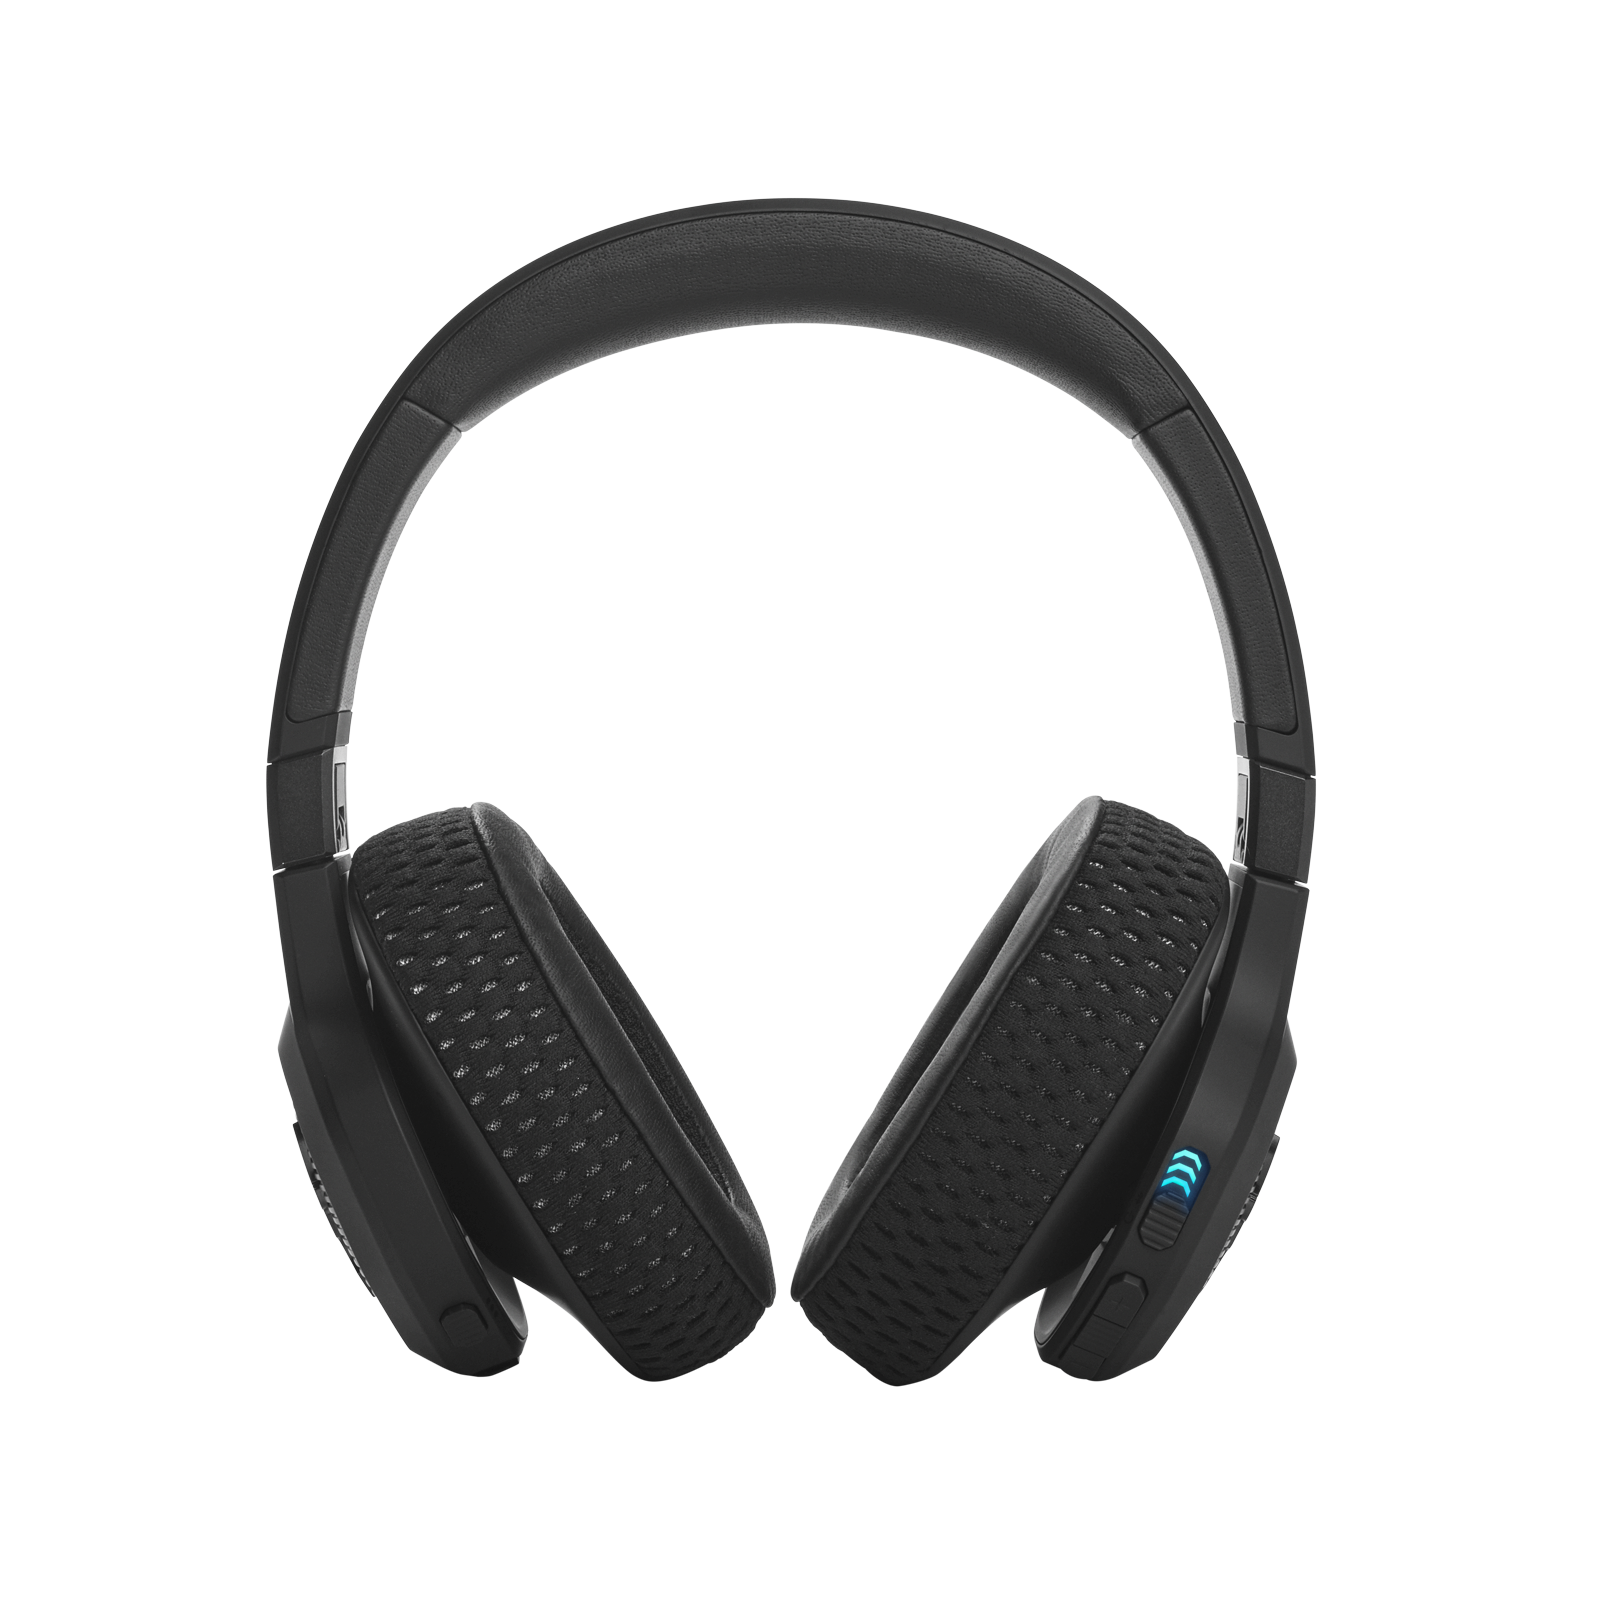 UA Project Rock Over-Ear Training Headphones - Engineered by JBL - Black - Over-Ear ANC Sport Headphones - Back